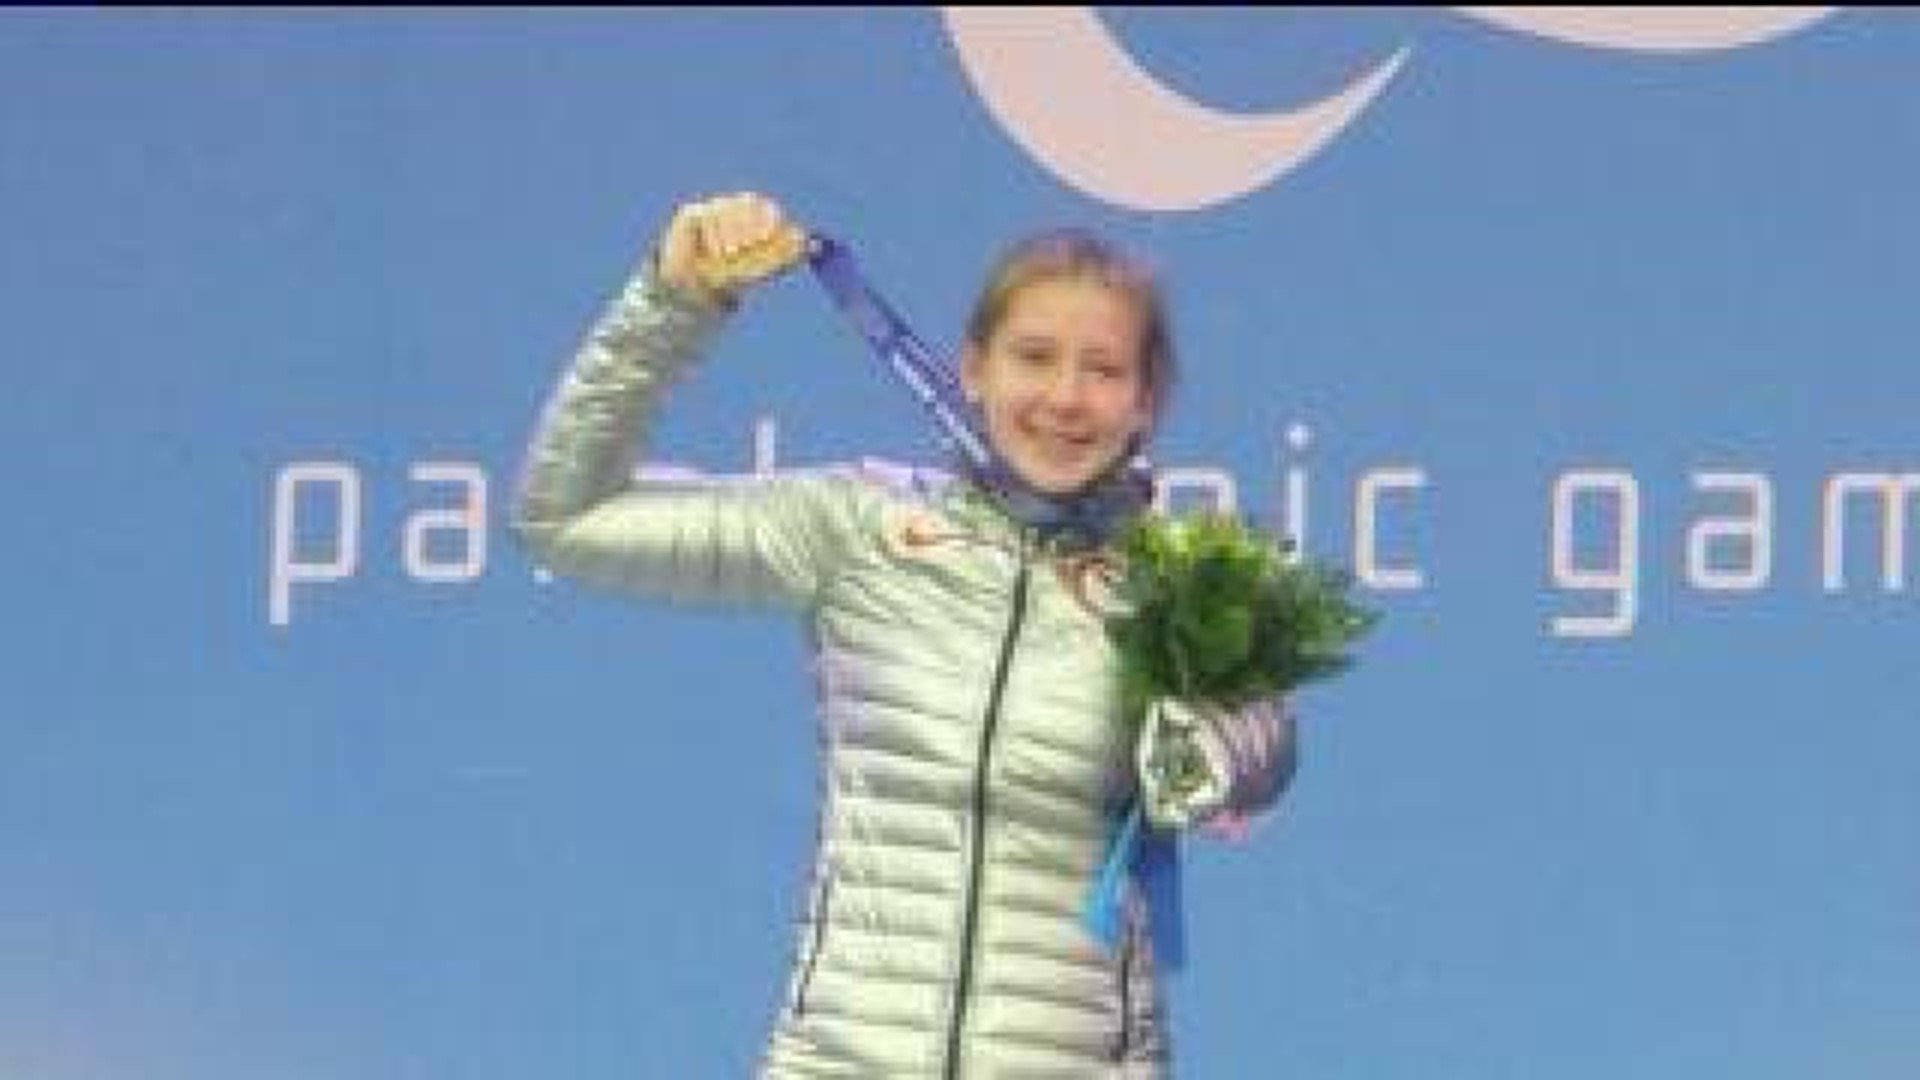 Local Paralympian Wins Bronze in Sochi